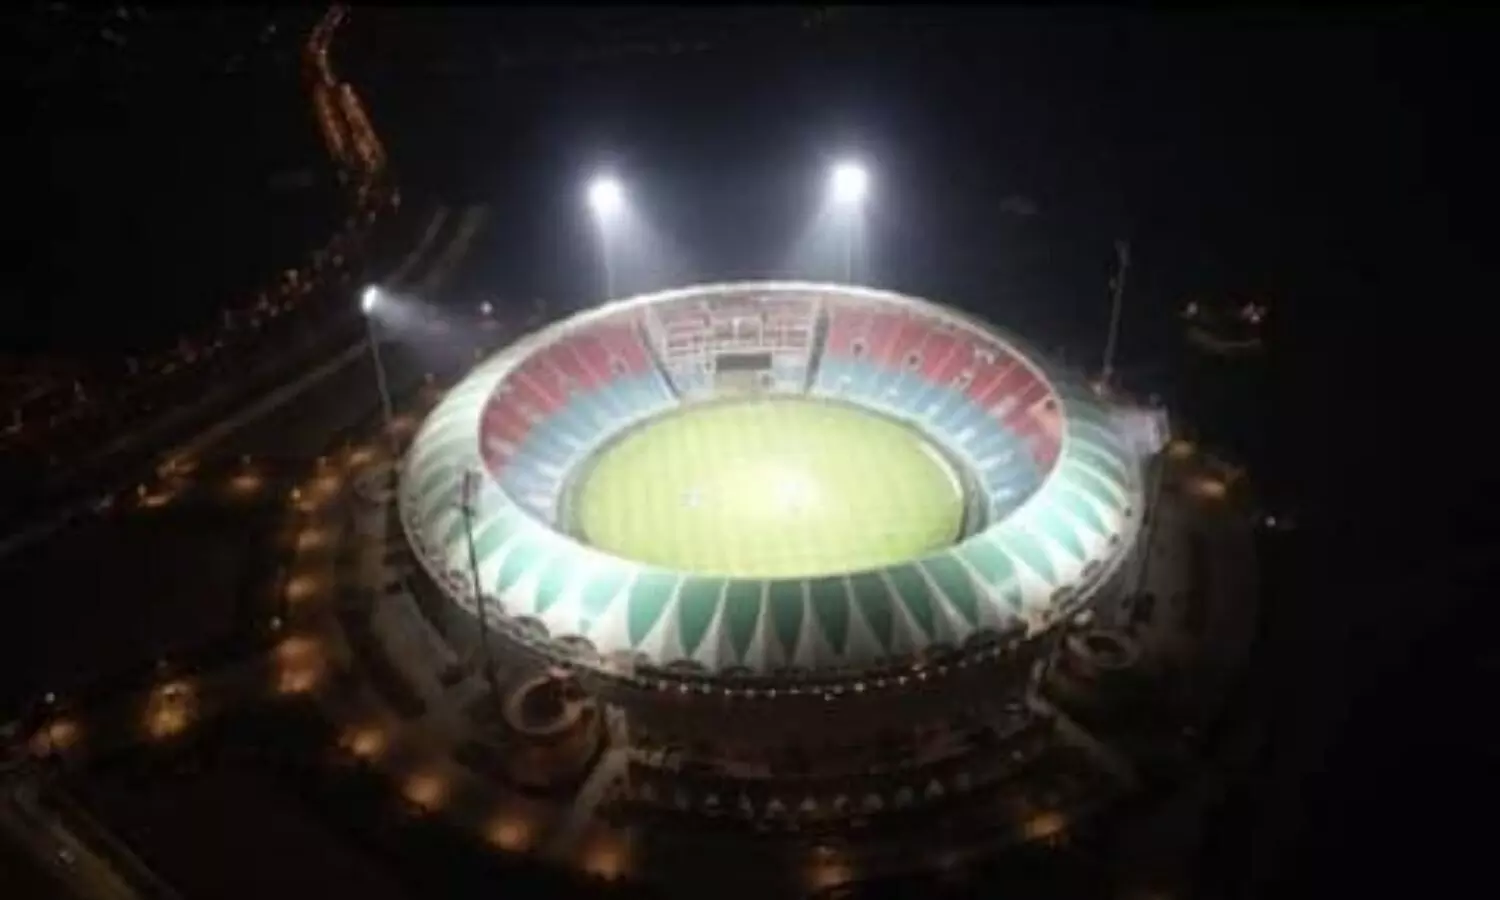 Bharat Ratna Atal Bihari Vajpayee Ekana Cricket Stadium Lucknow